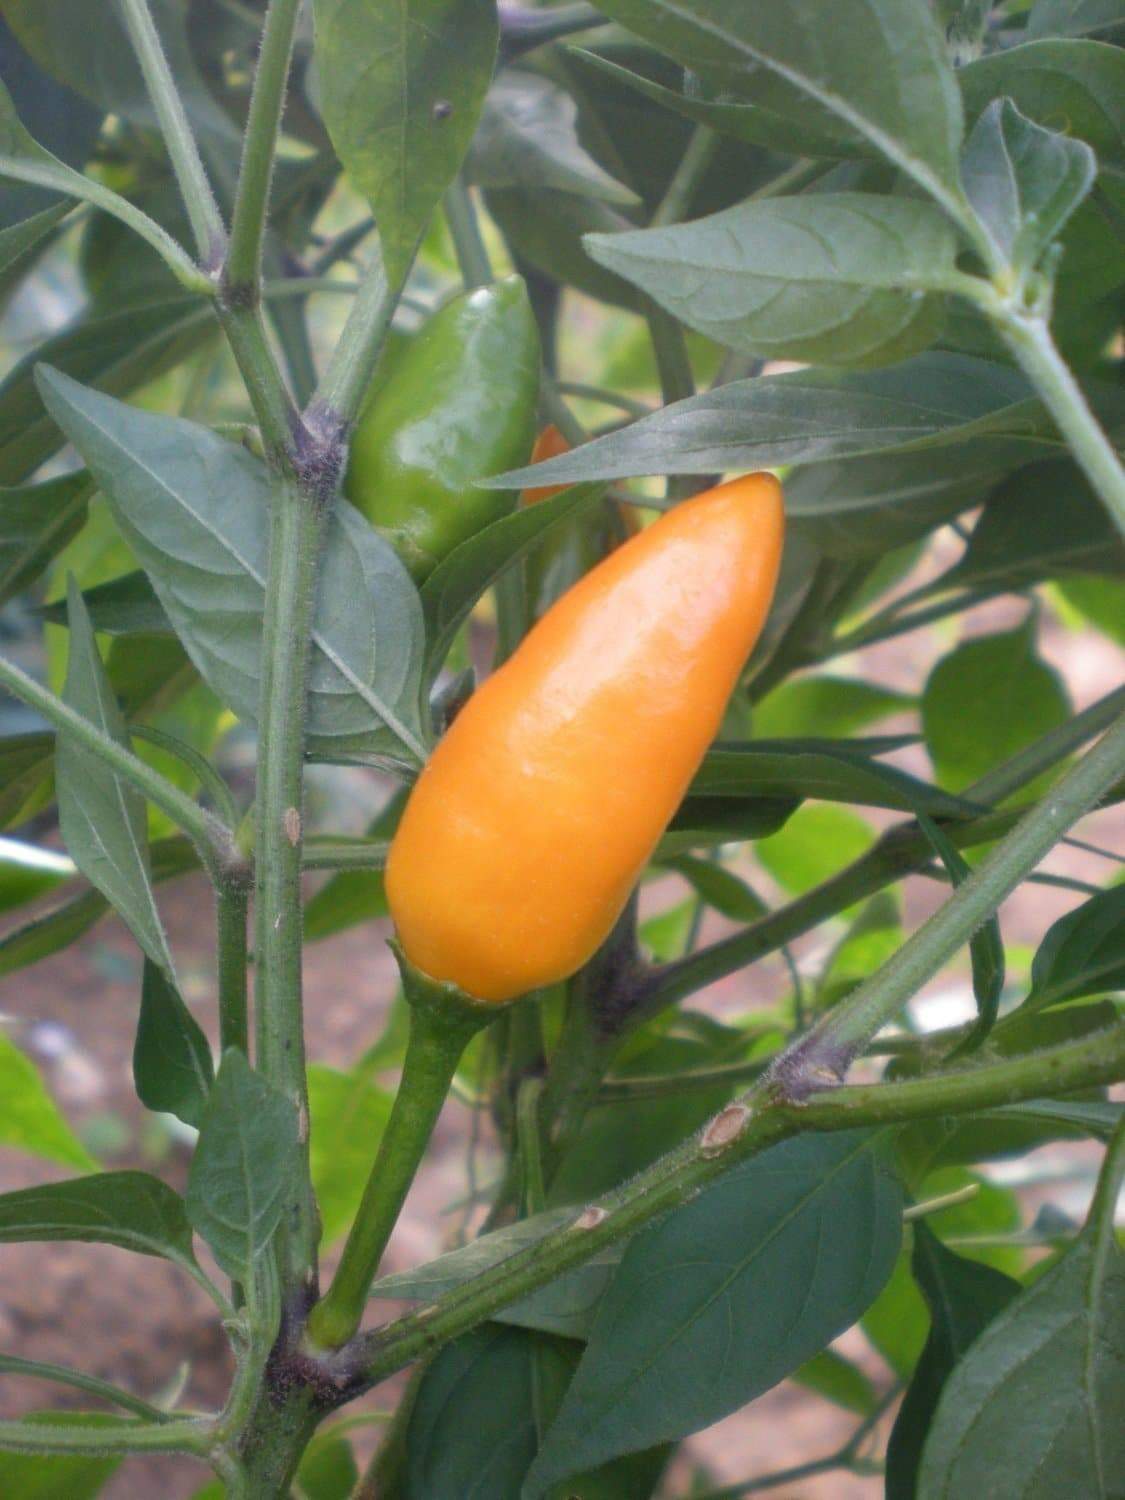 Yemen hot pepper